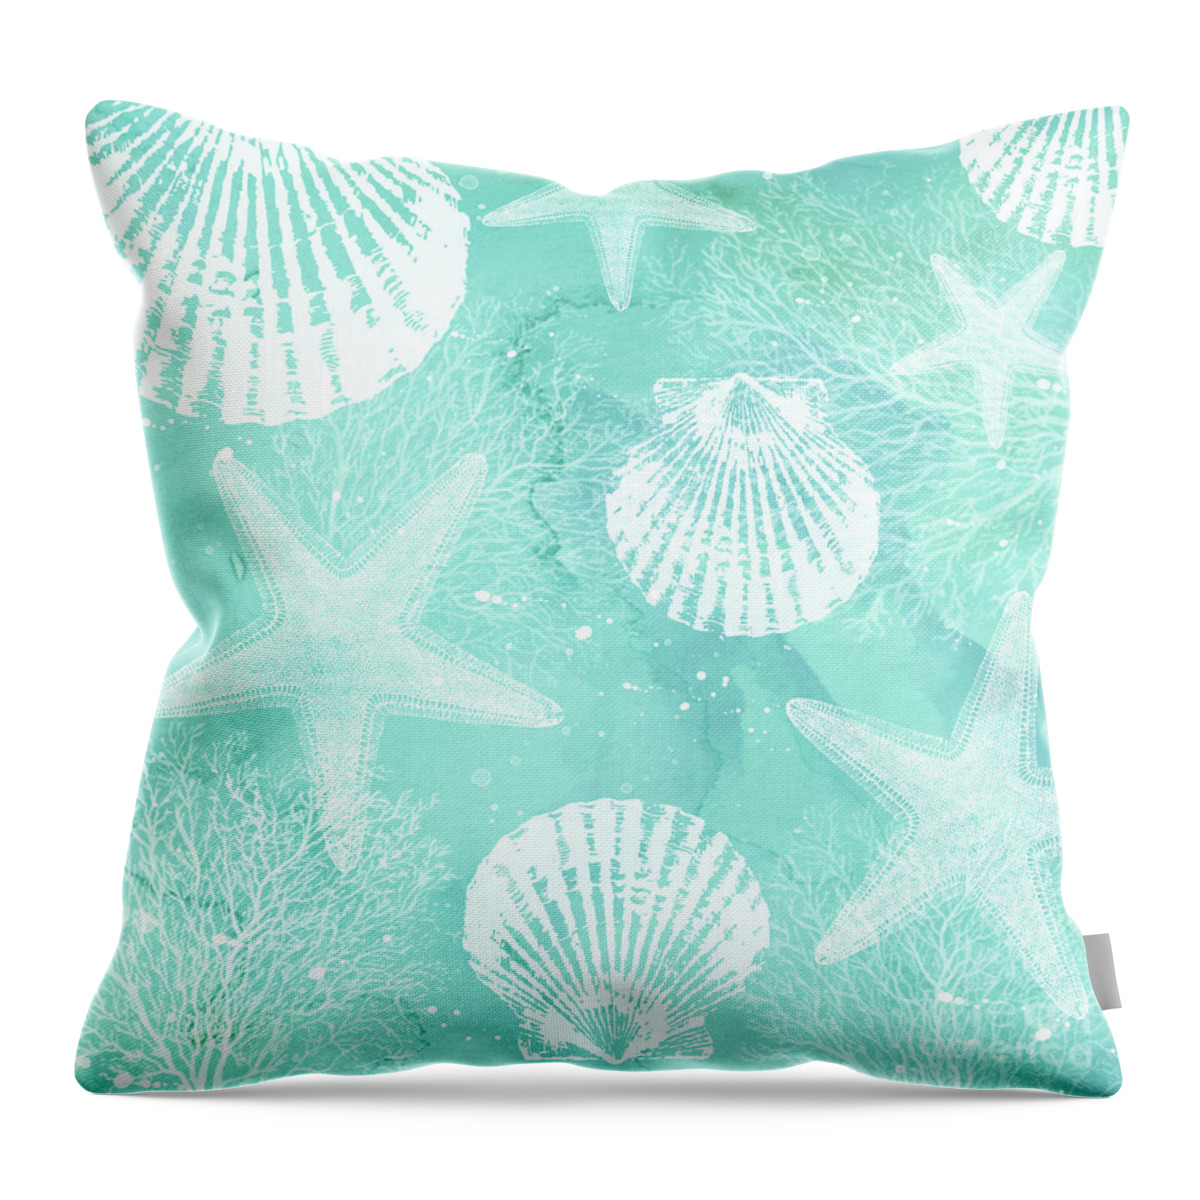 Coastal Throw Pillow featuring the digital art Coastal by Sylvia Cook